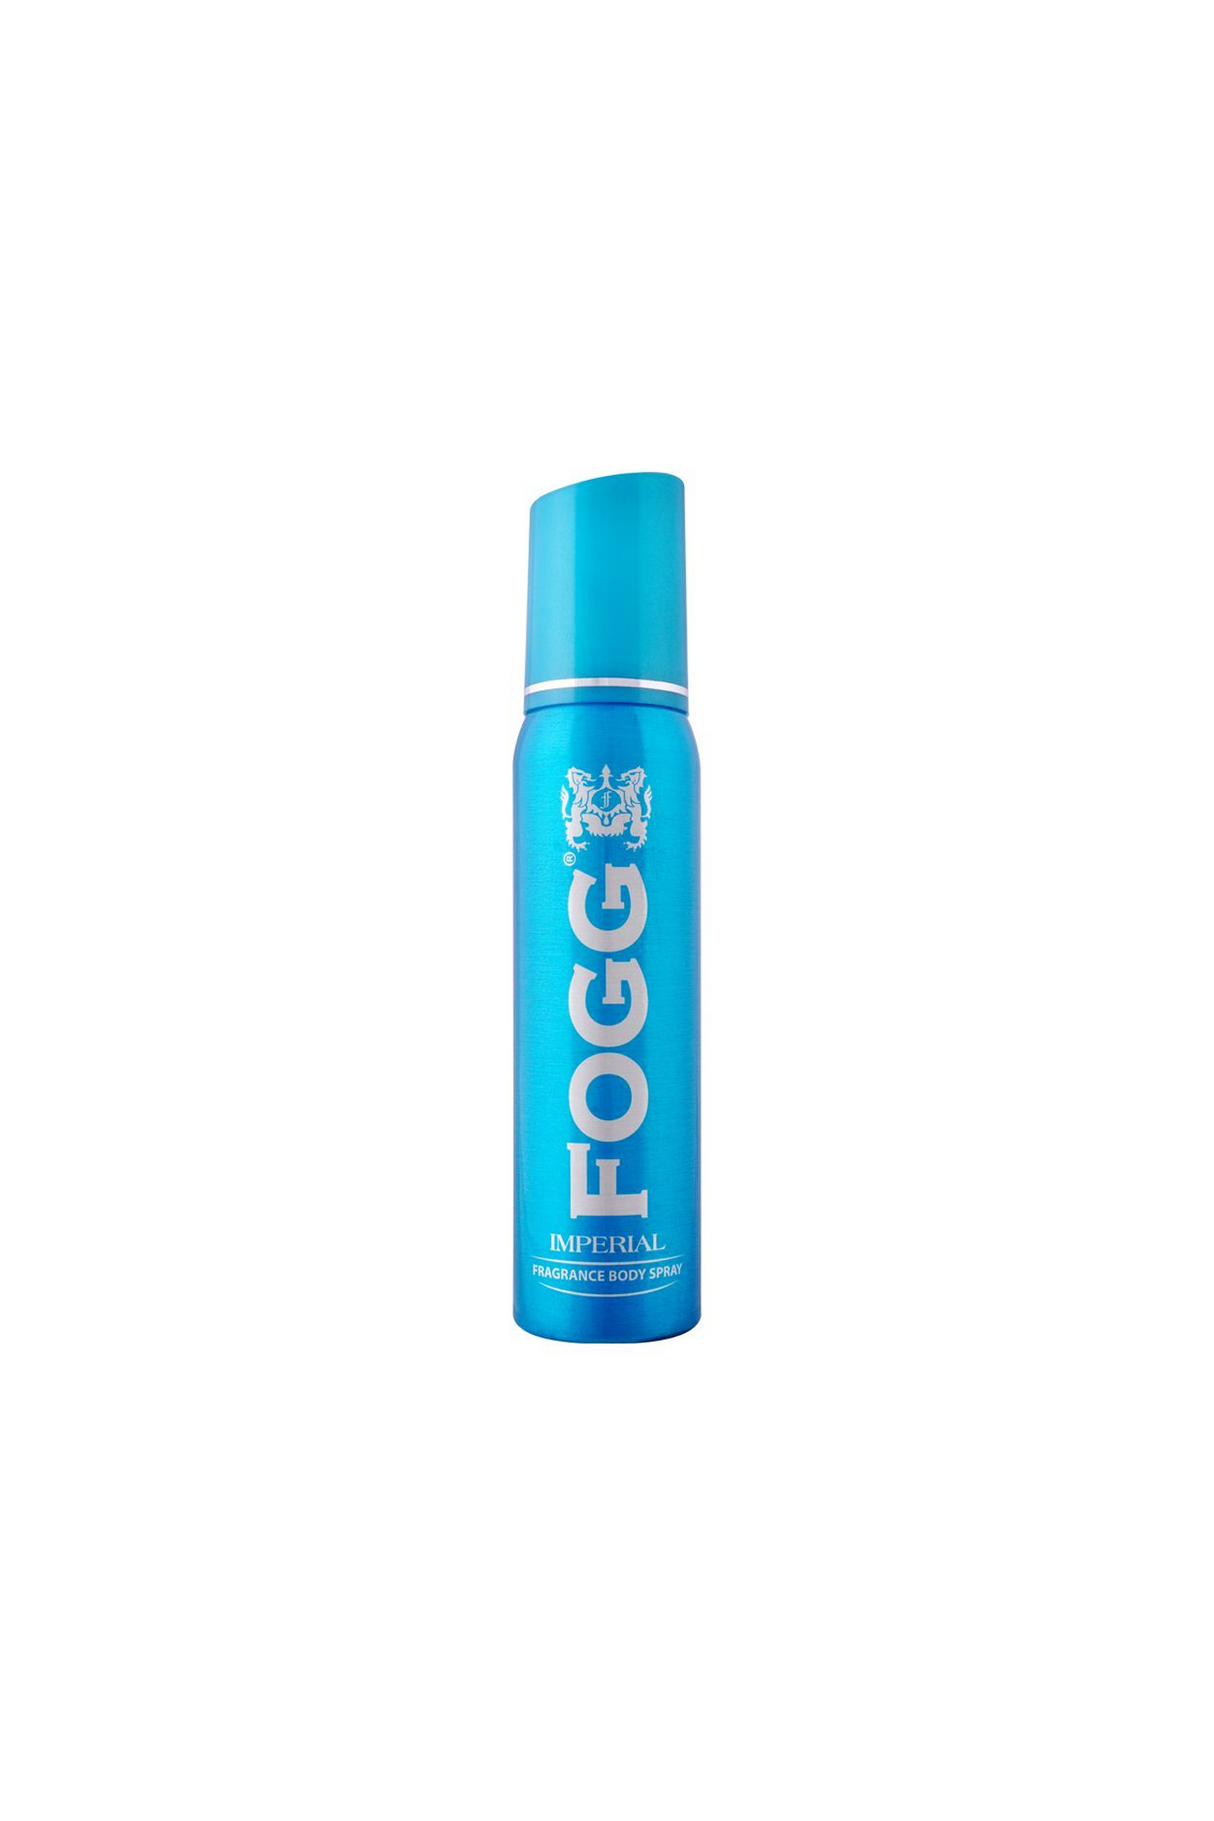 fogg imperial deodorant body spray 120ml